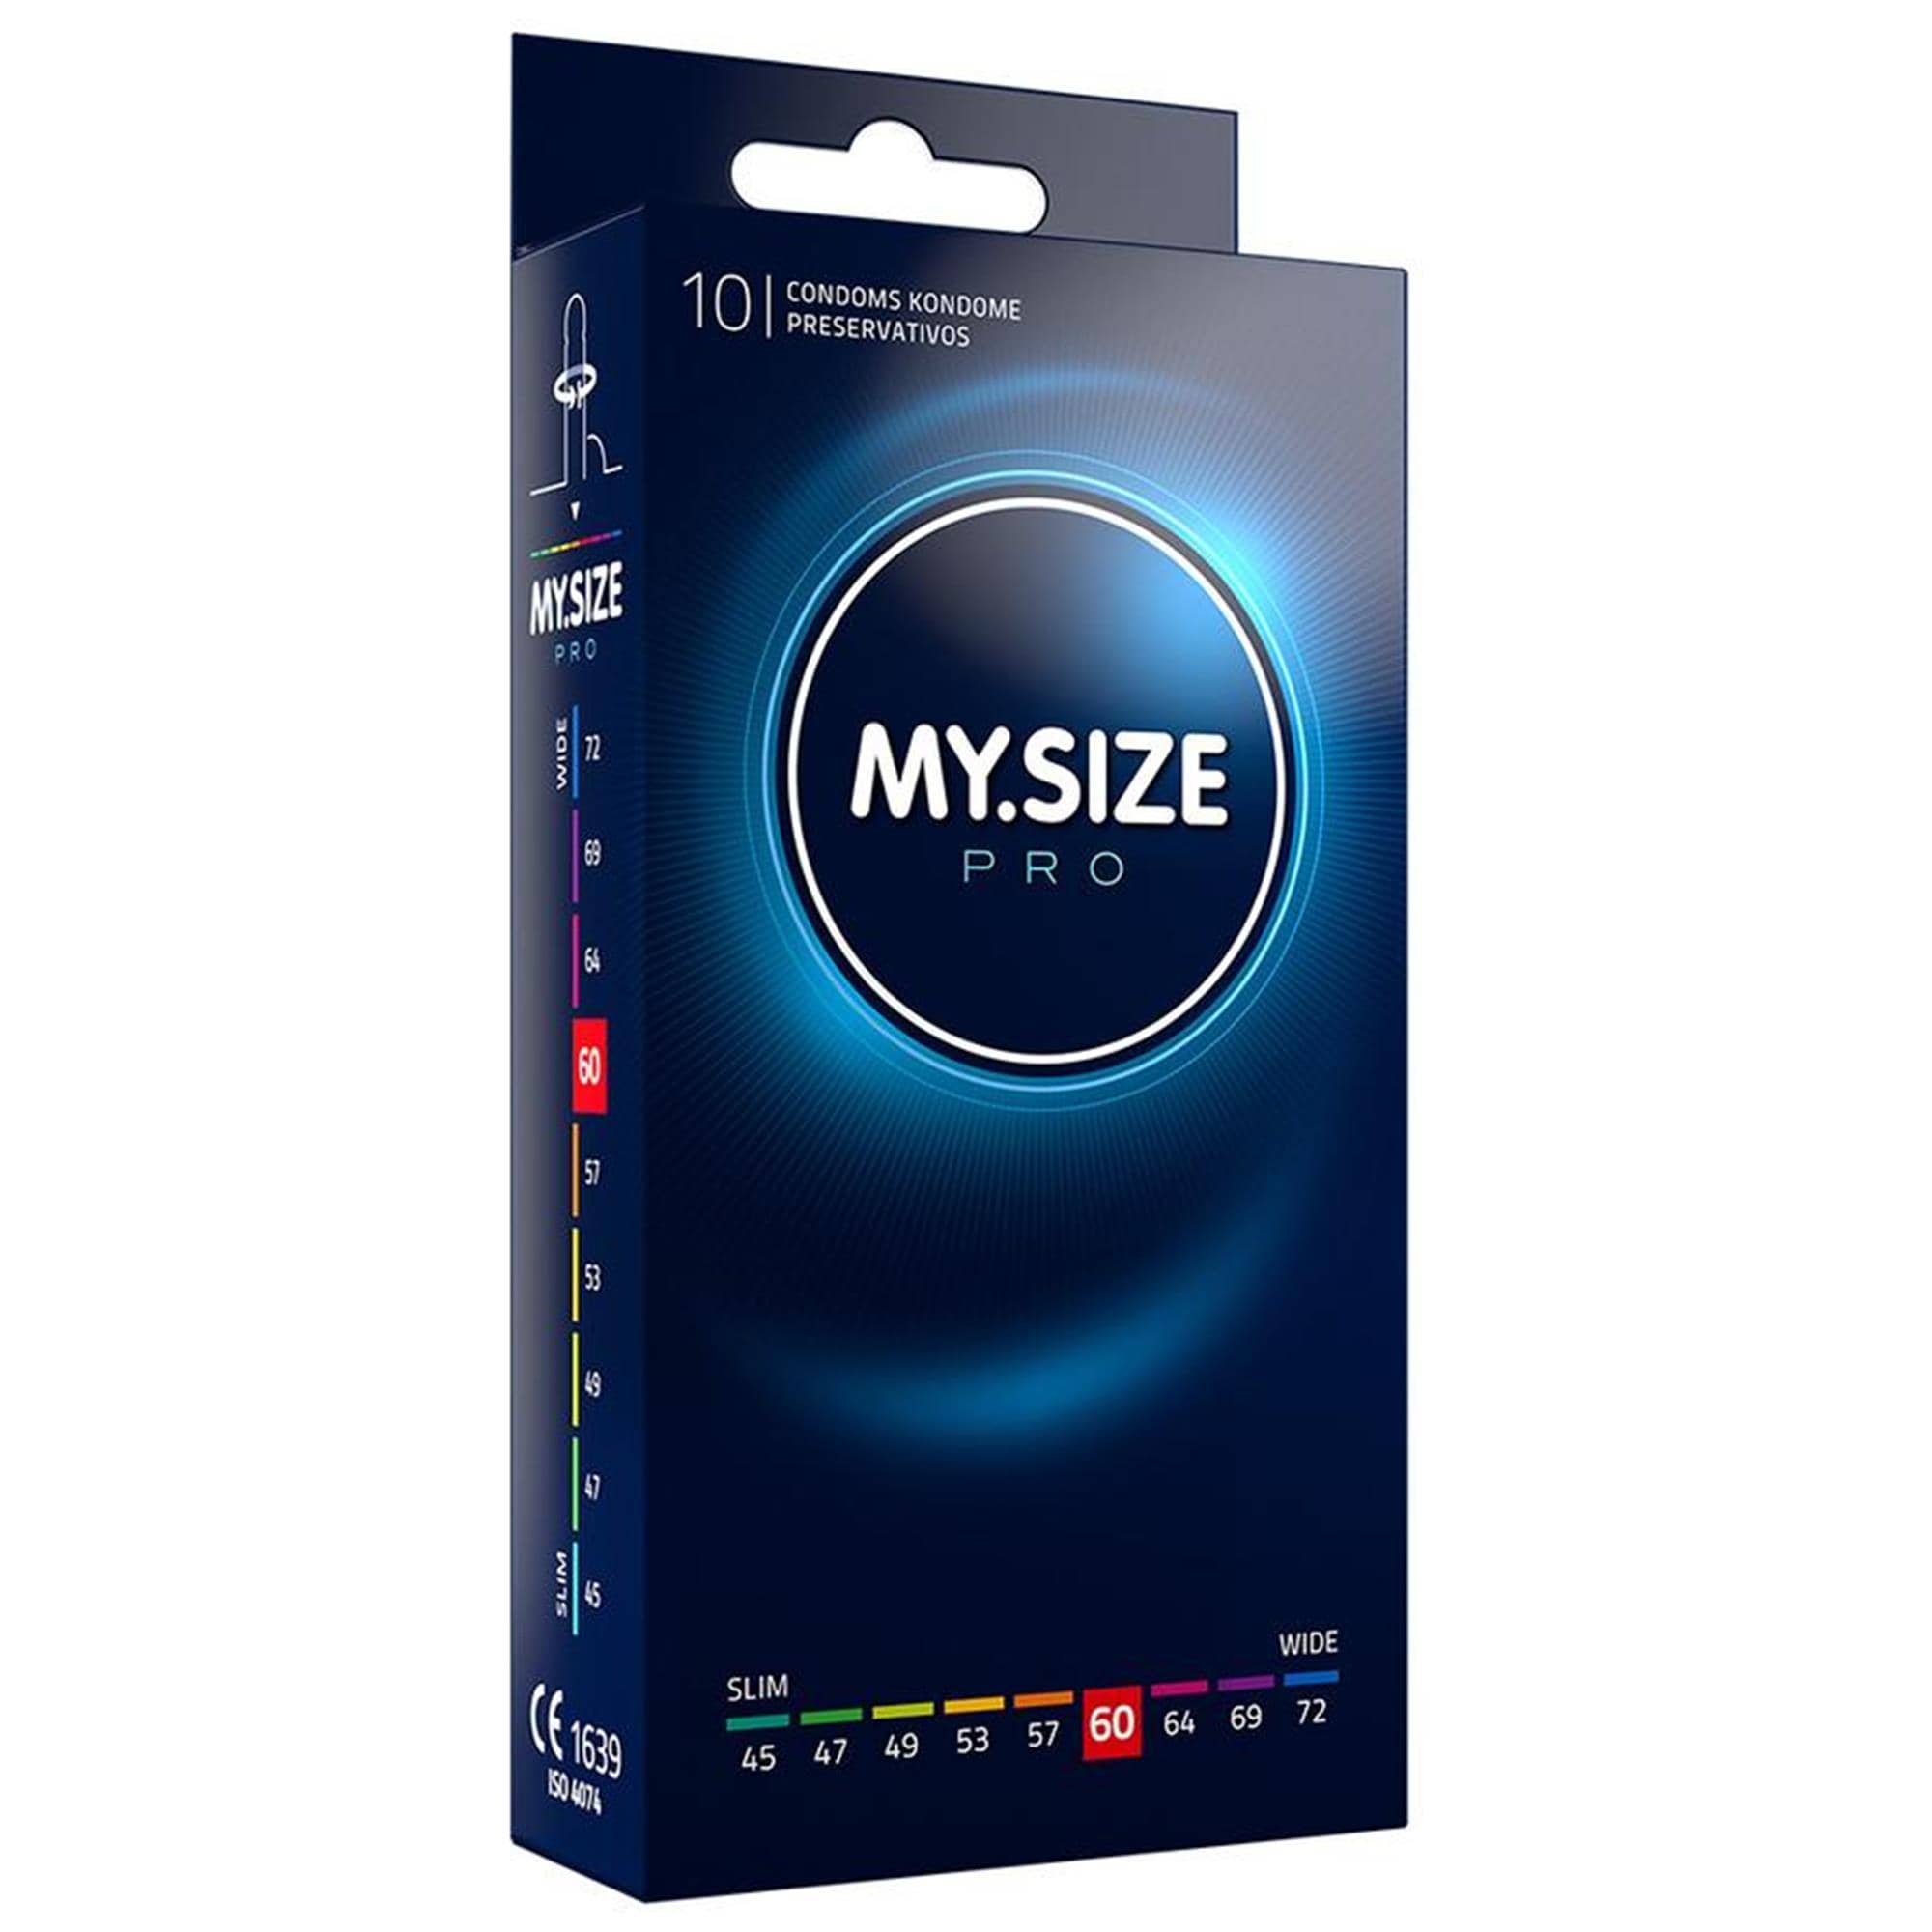 My Size Kondom 60 mm - 10-pack | Kondomer | Intimast